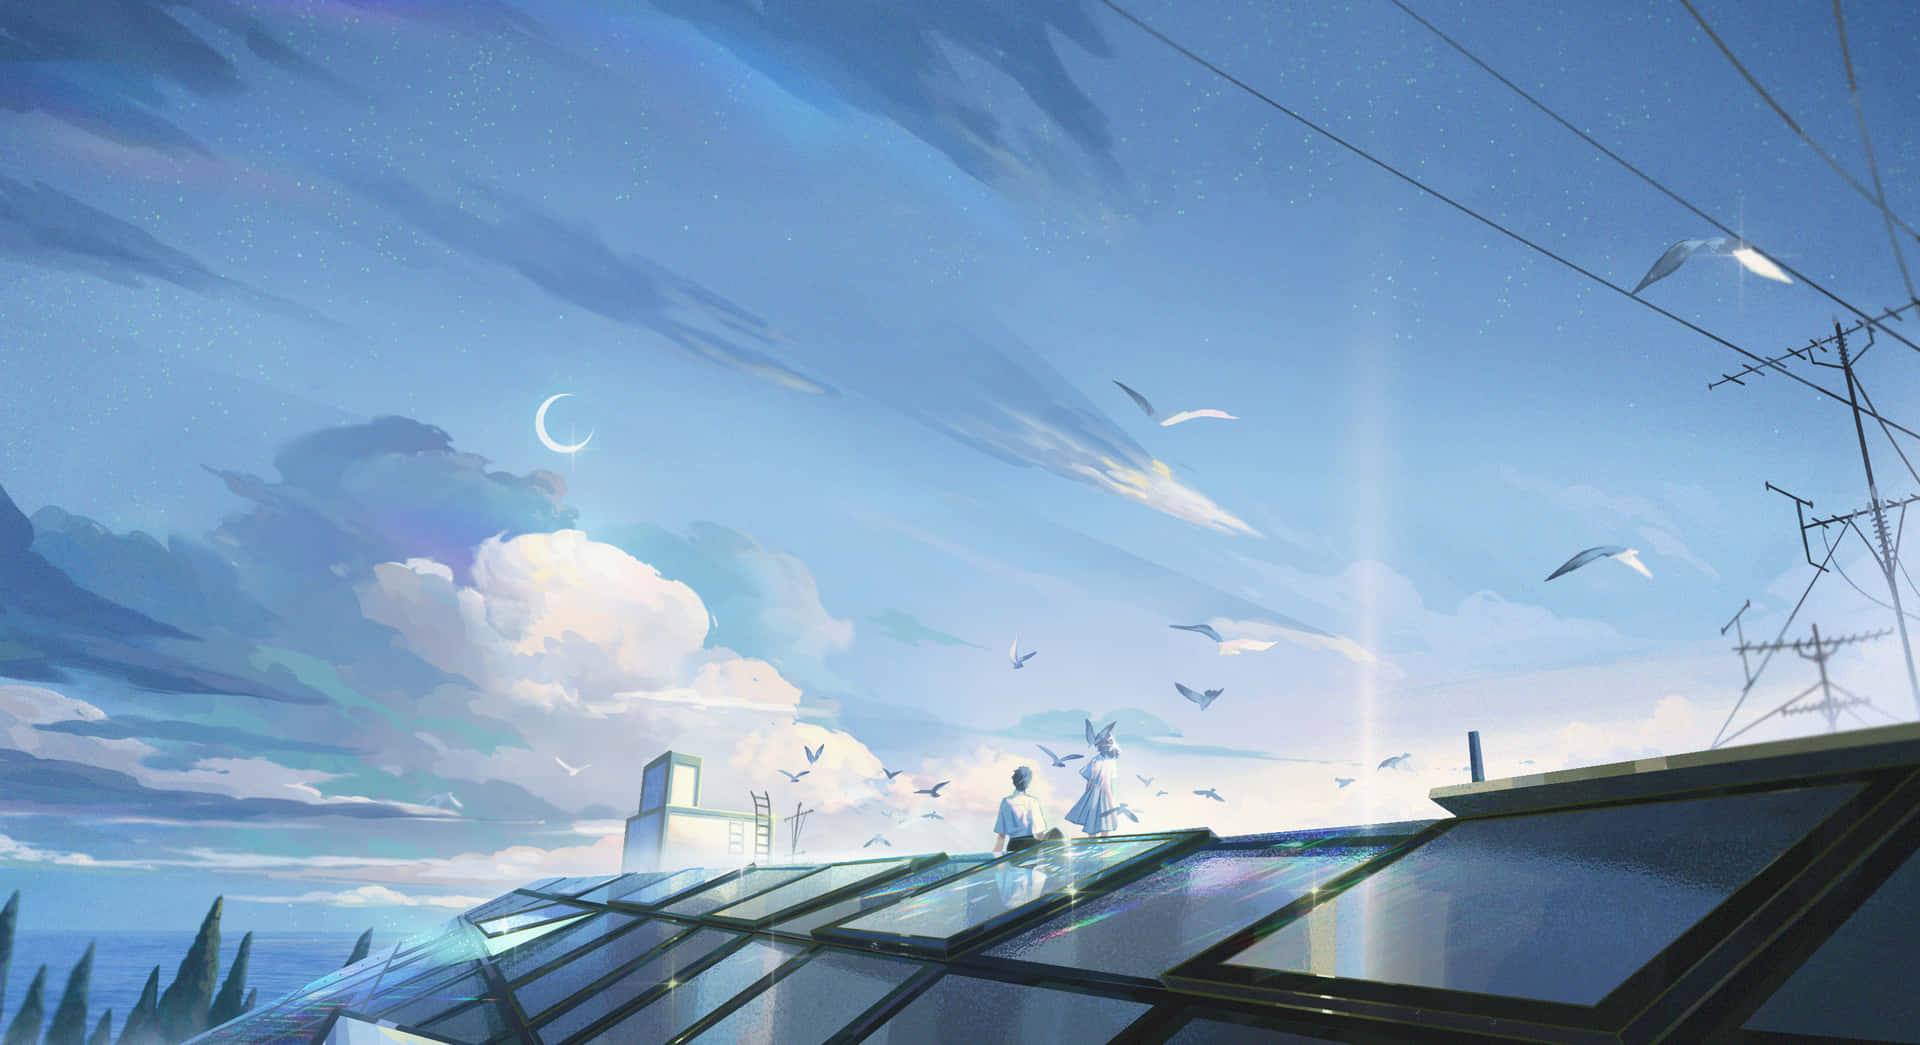 "Experience the beauty of an Anime Sky"